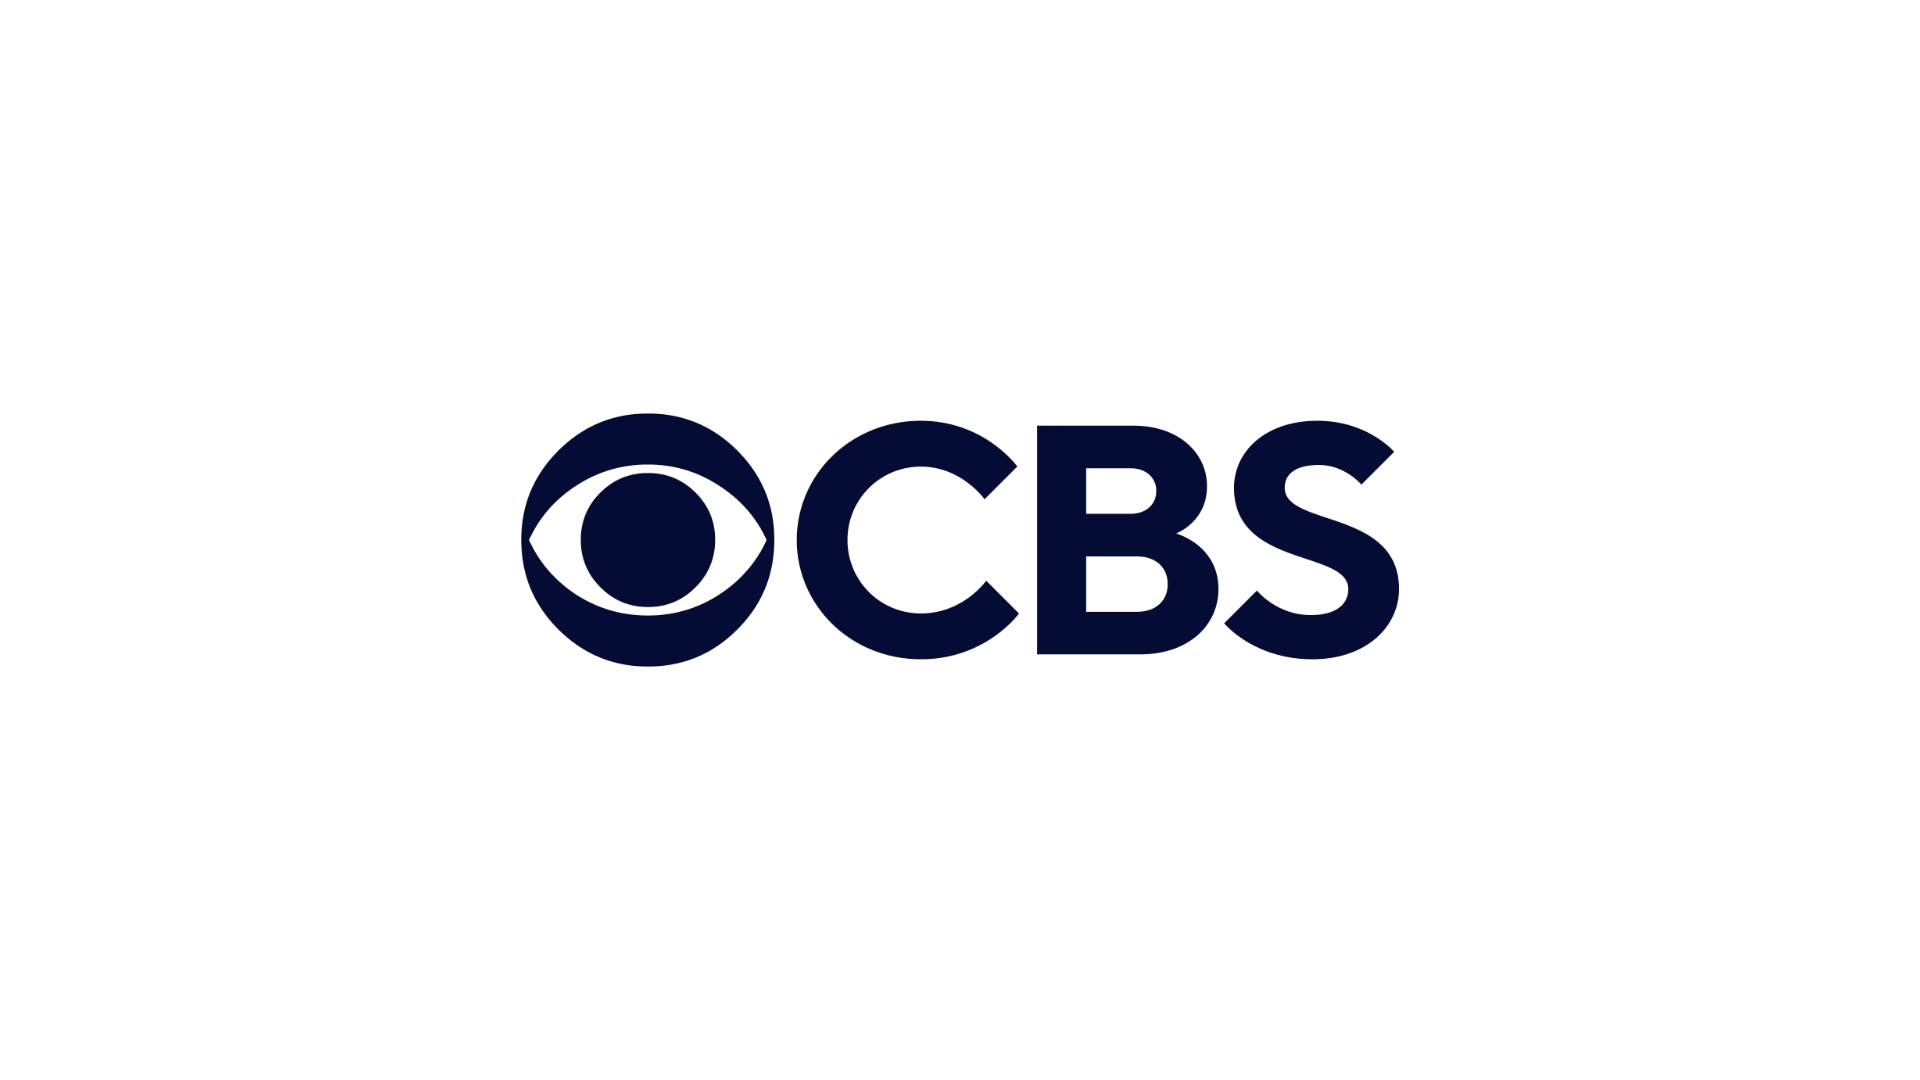 CBS Logo in Navy on White Background